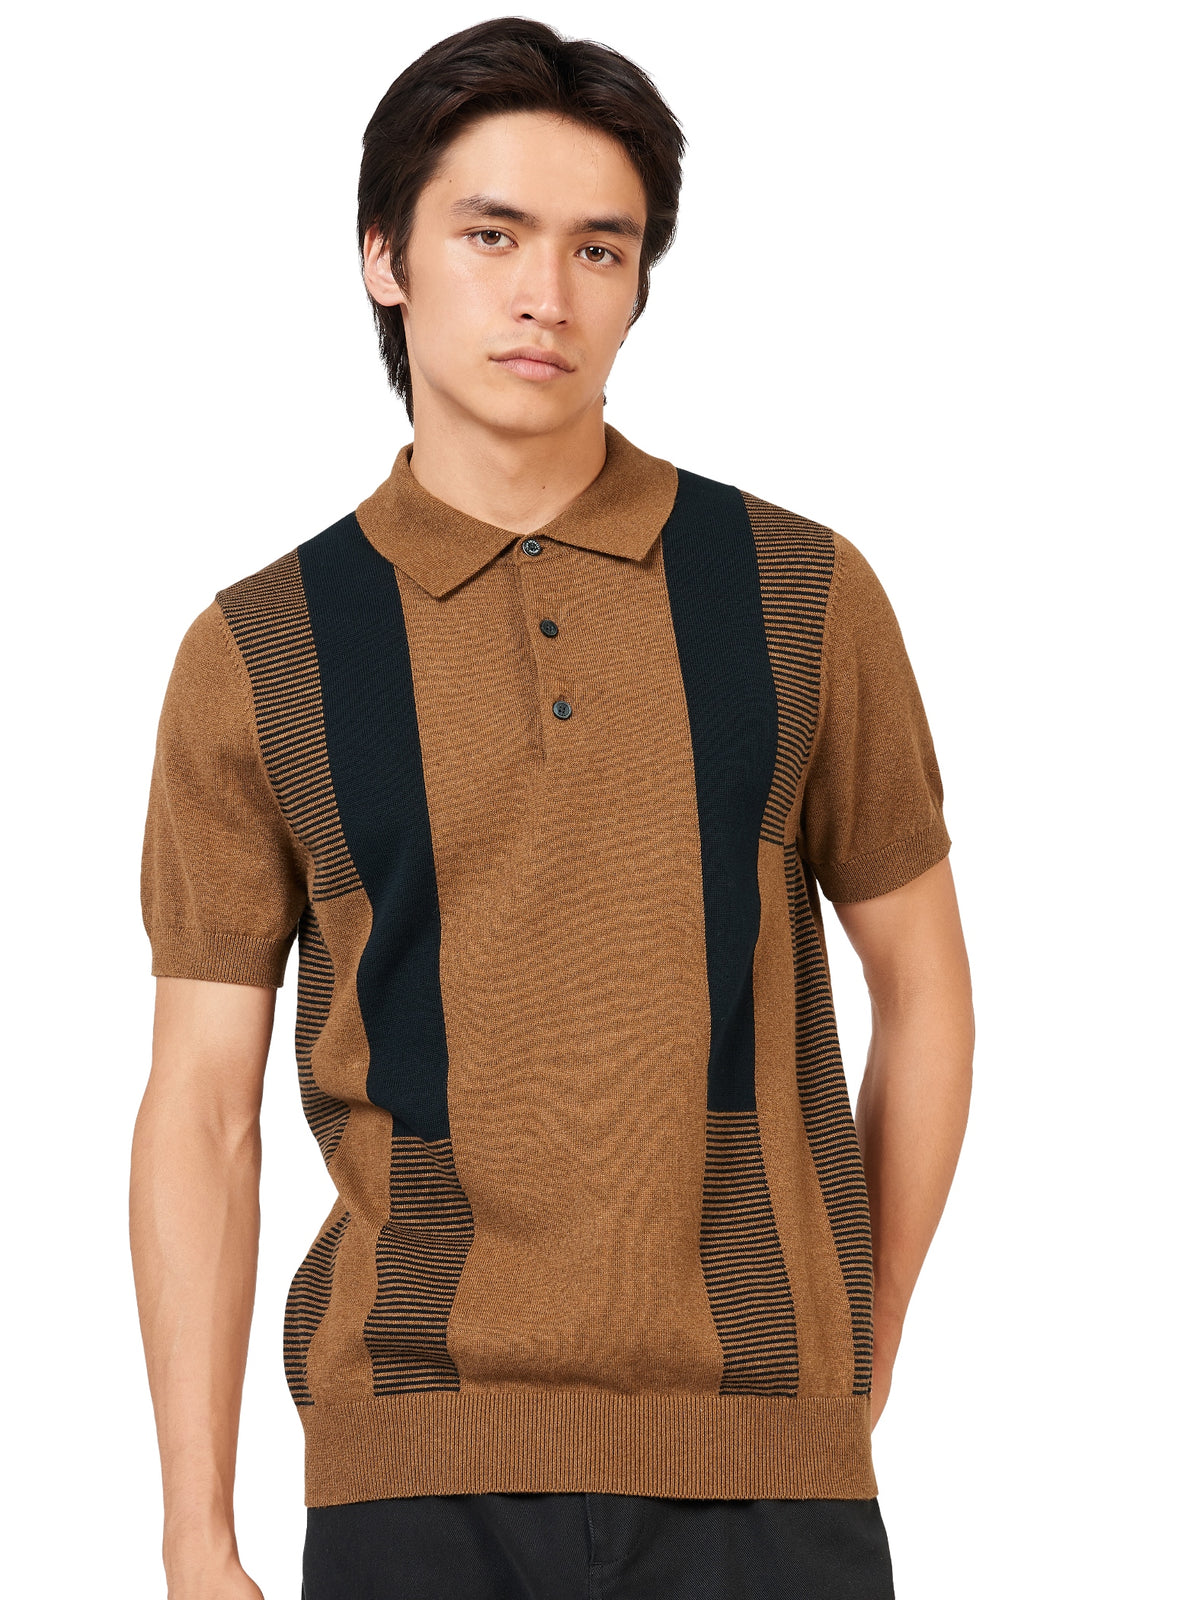 Ben Sherman Mens Inarsia Stripe Knit Polo Shirt, 01, 74196, Ginger